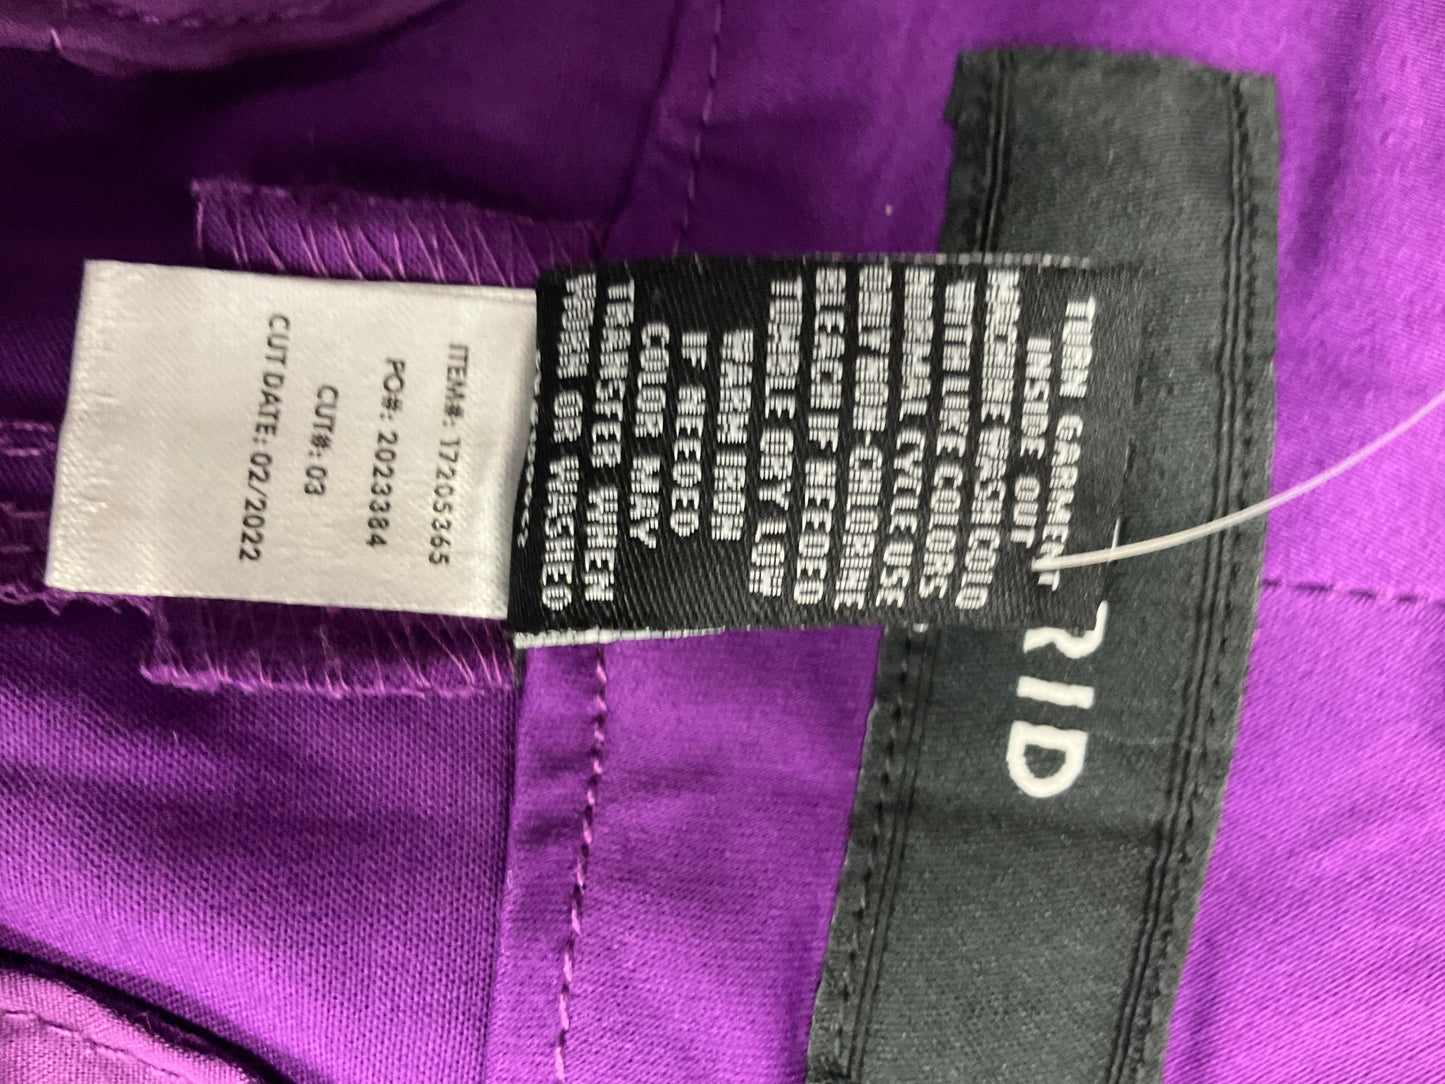 Purple Shorts Torrid, Size 18